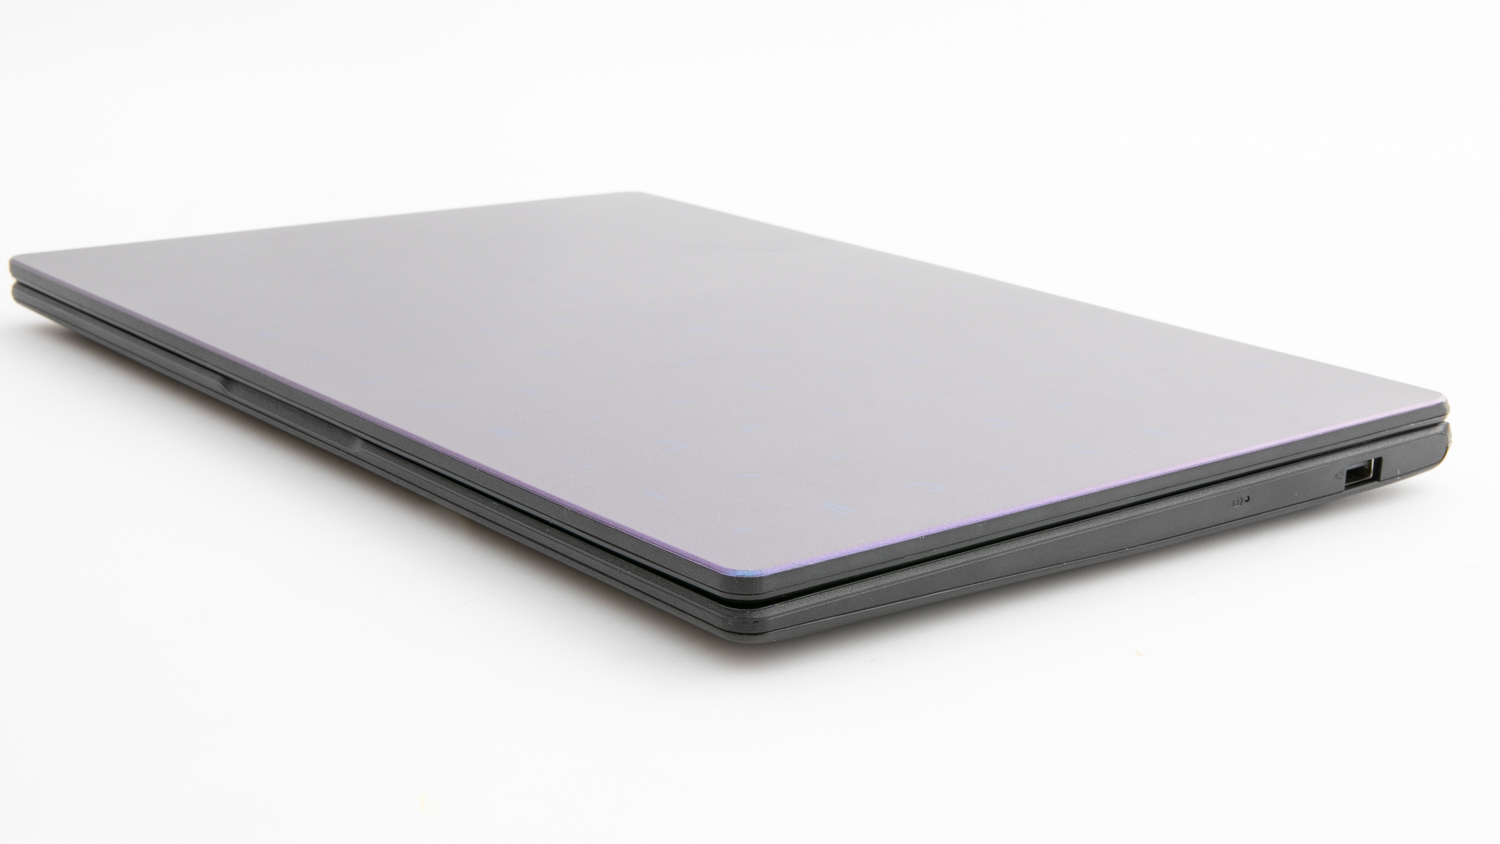 Asus E410m E410ma Ek005ts Review Laptop And Tablet Choice 5578